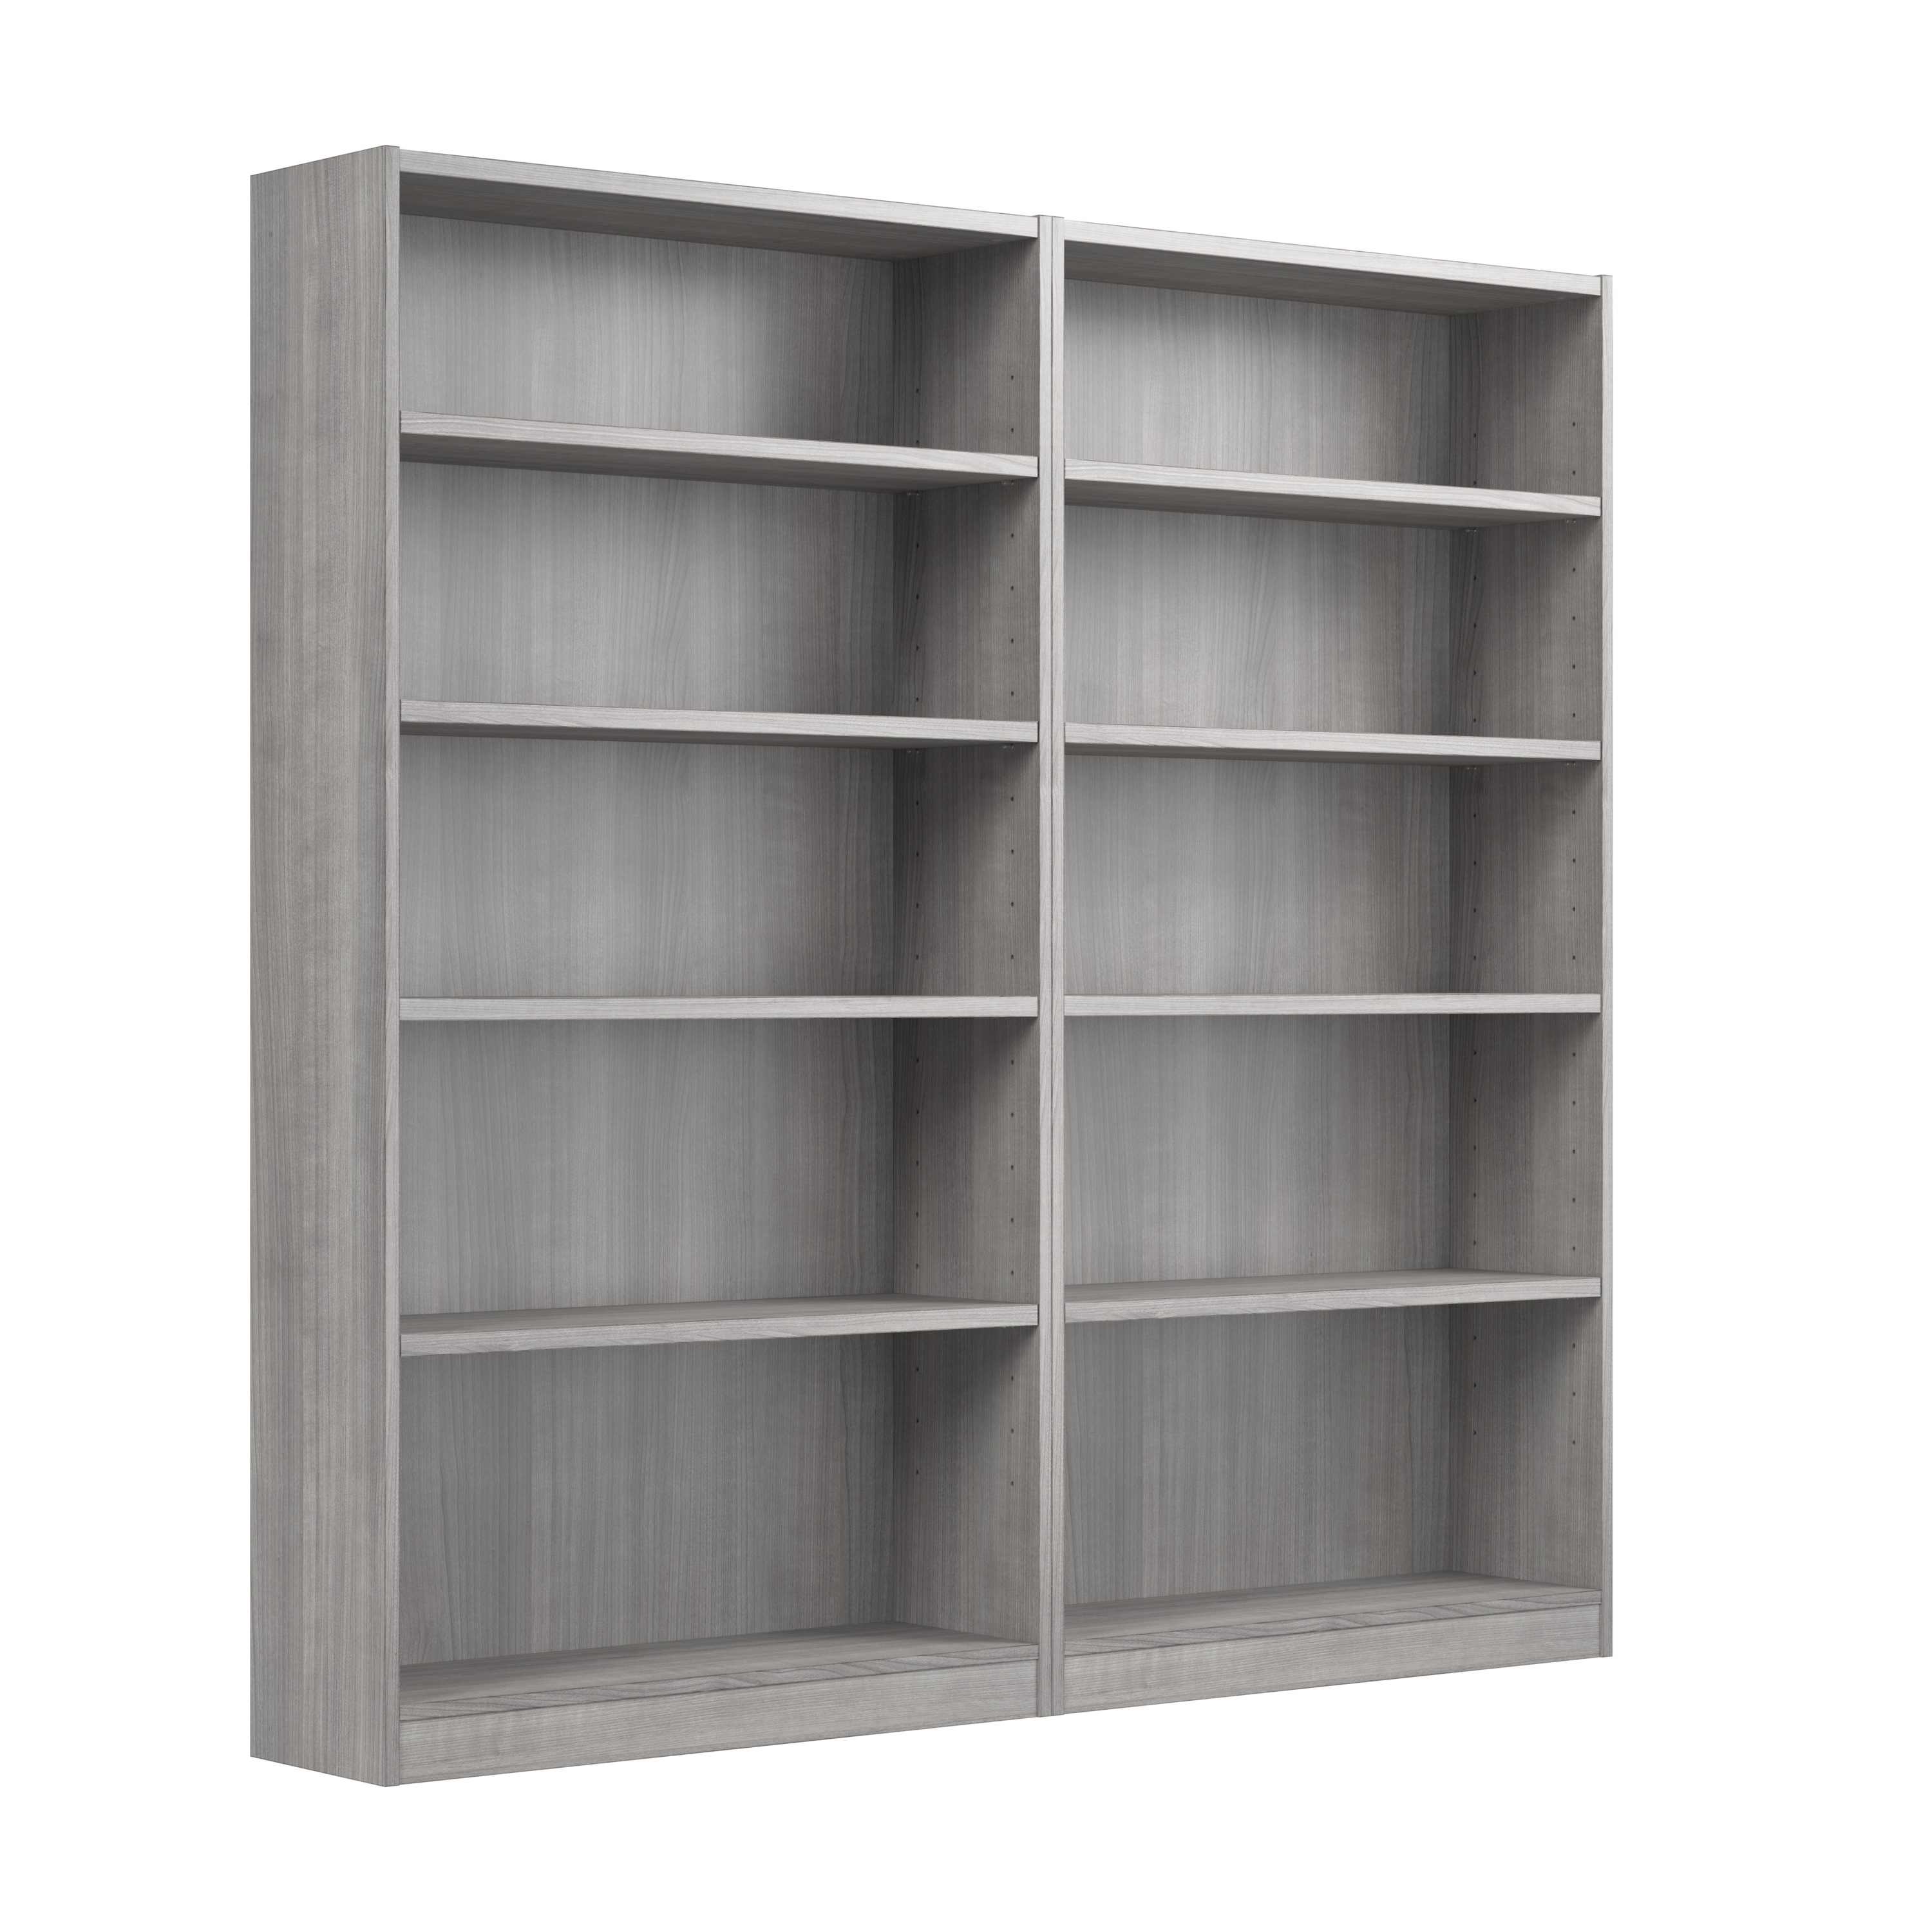 Shop Bush Furniture Universal Tall 5 Shelf Bookcase - Set of 2 02 UB003PG #color_platinum gray